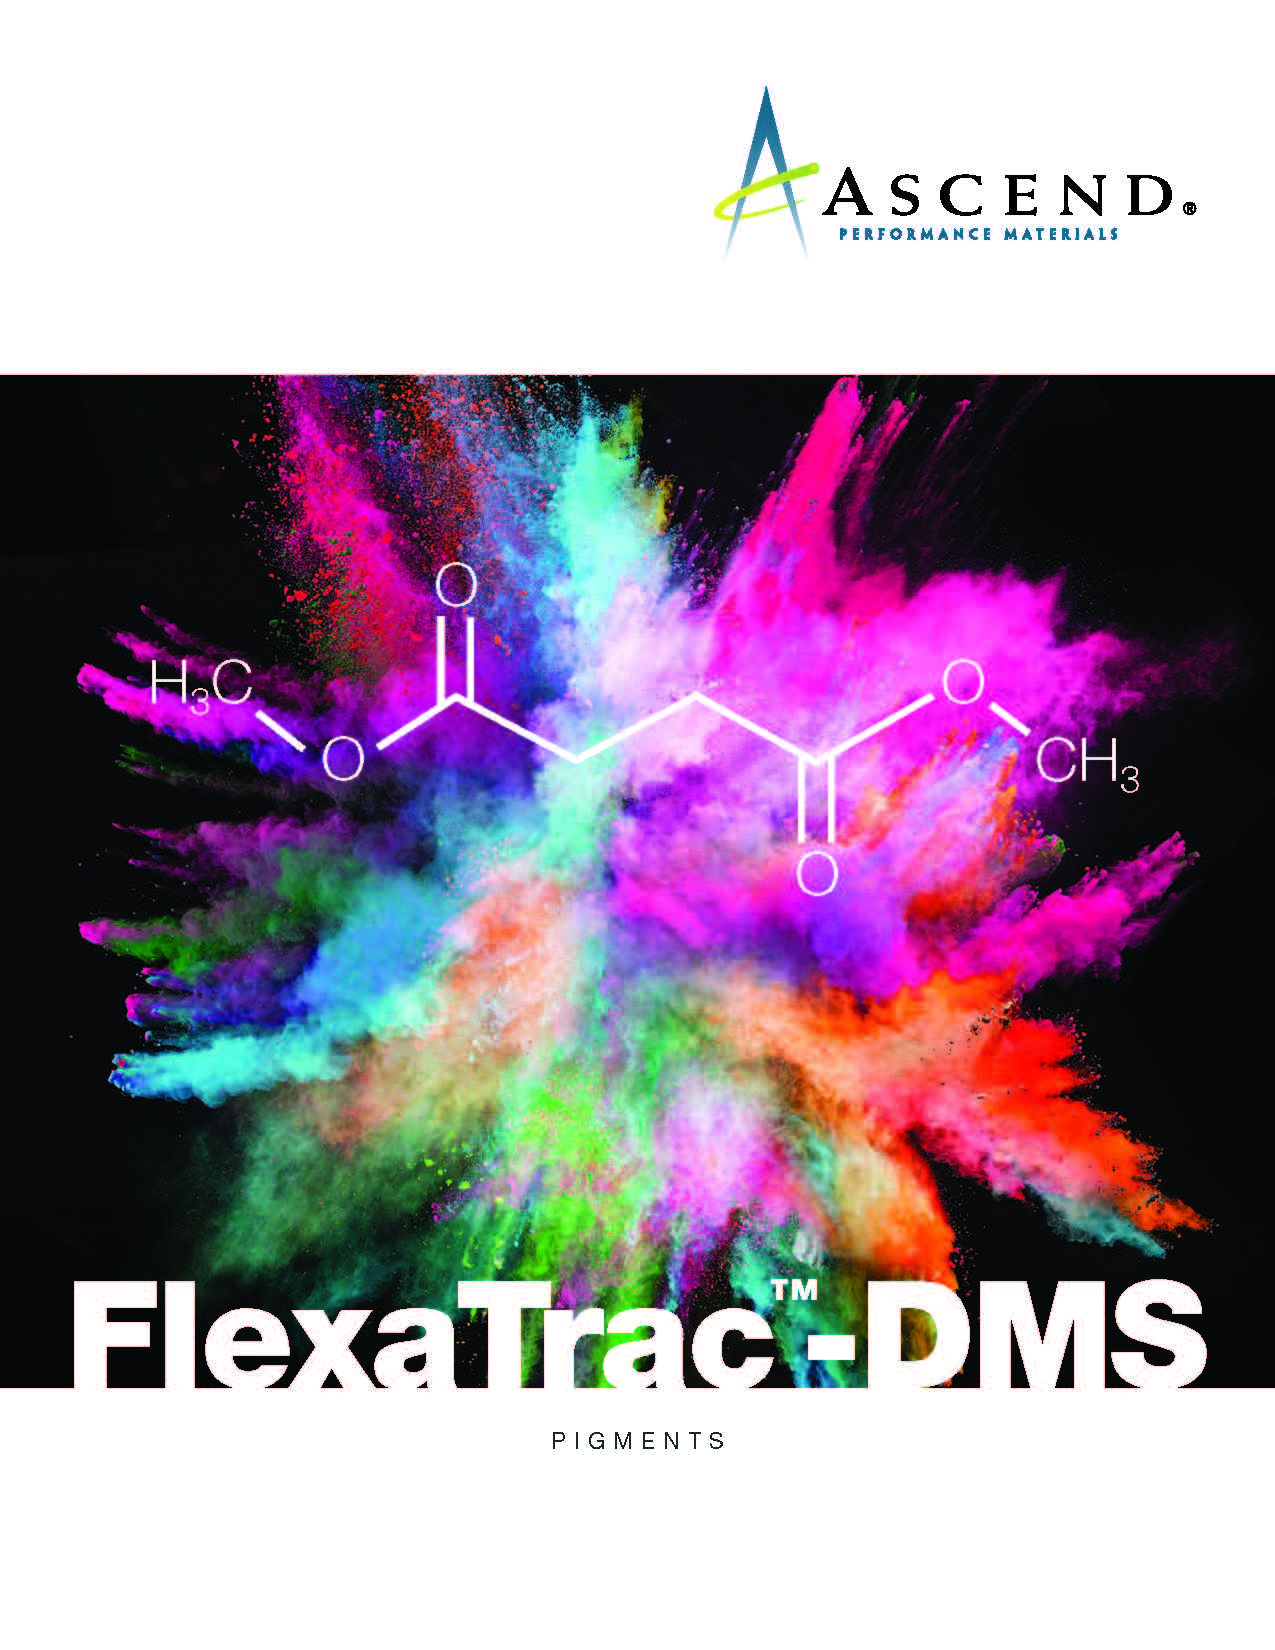 FlexaTrac®-DMS for pigments